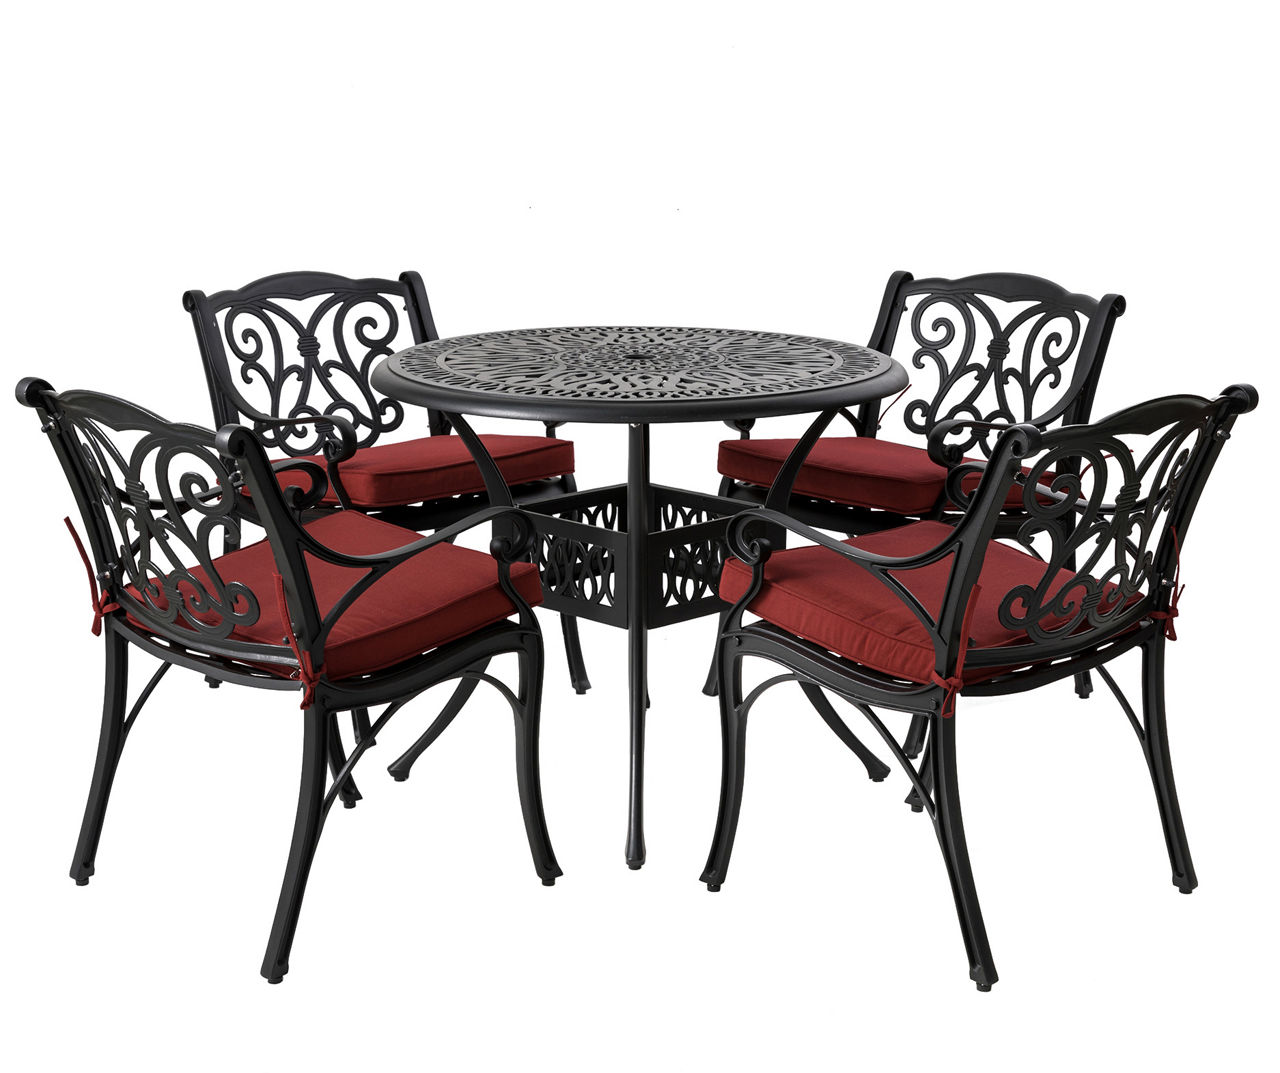 5 Piece Cast Aluminium Dining Set with Wine Red Cushions, Olefin Fabric